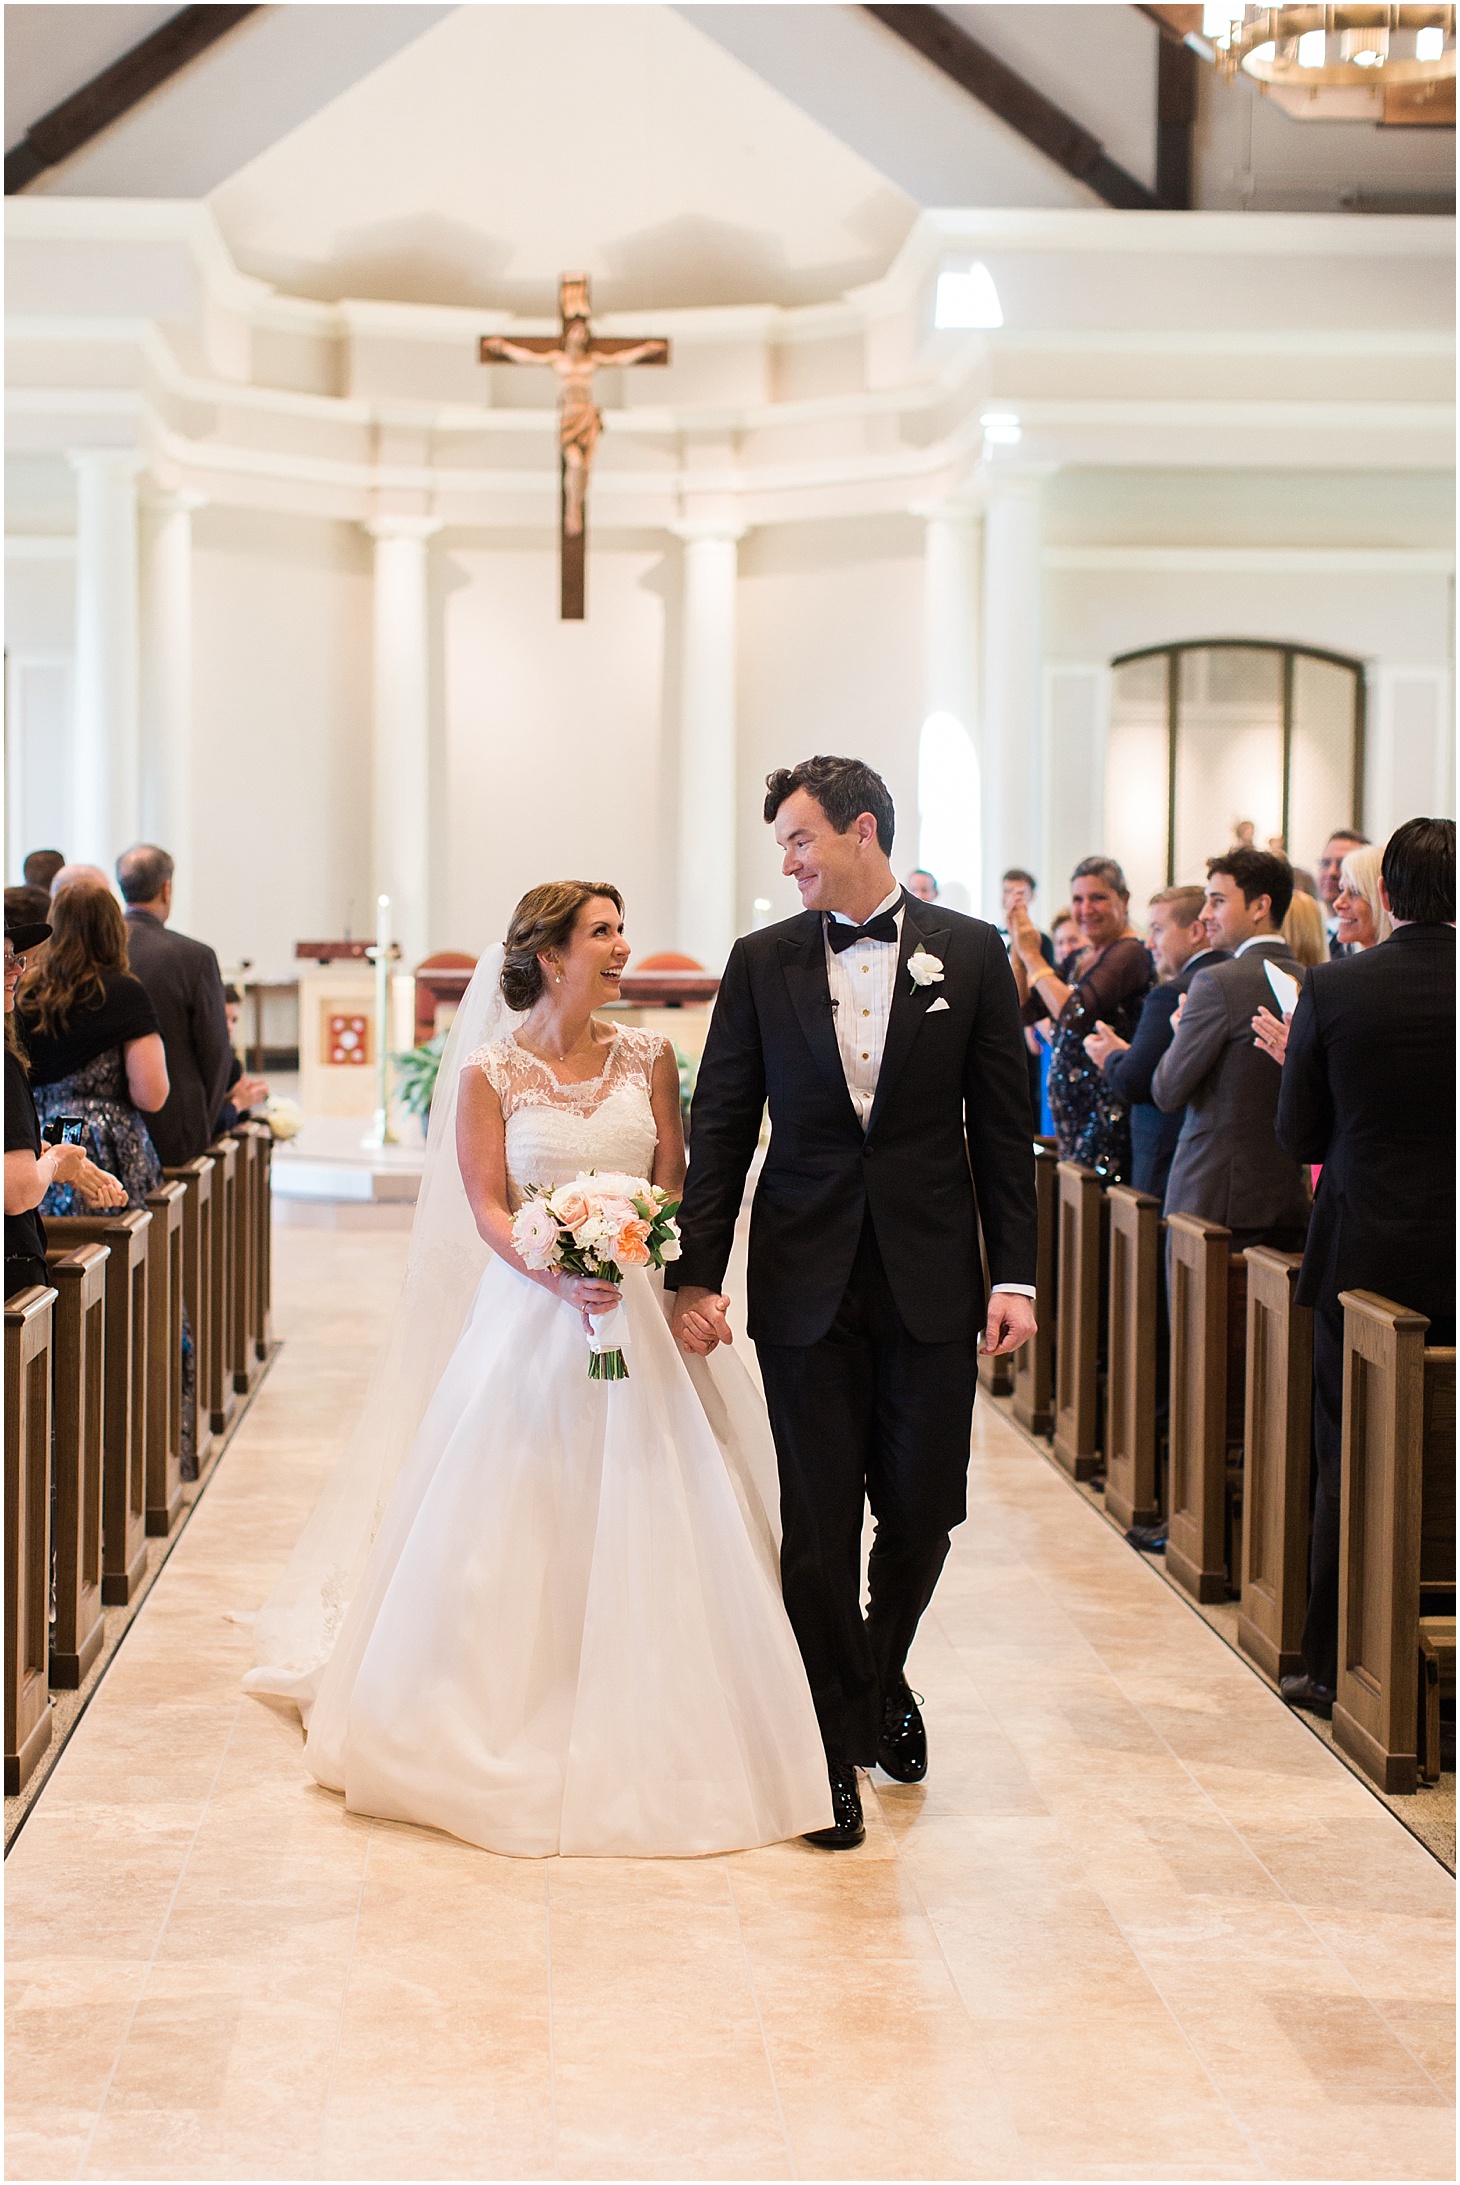 Wedding Ceremony at St. Olaf Catholic Church | Blush and Black Tie Wedding in Williamsburg, VA | Sarah Bradshaw Photography